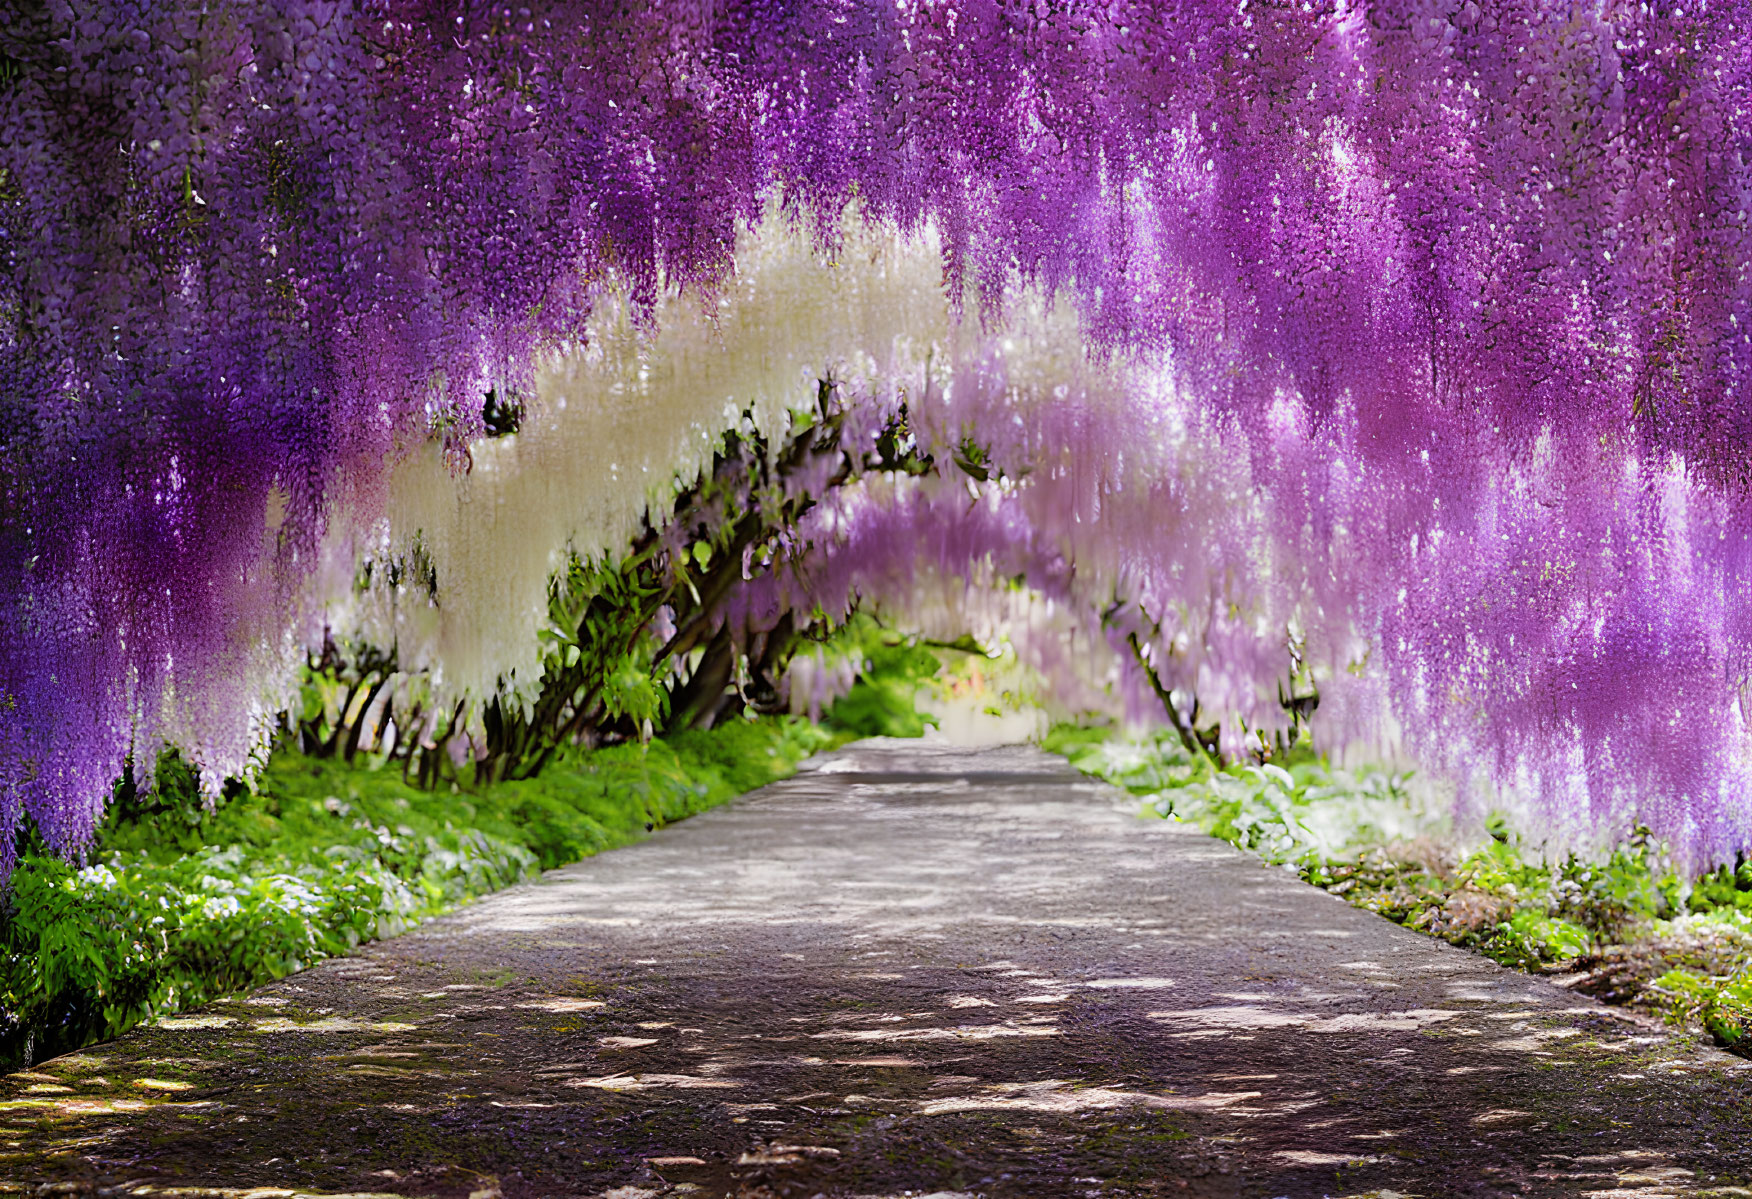 Vibrant wisteria flowers form picturesque garden path